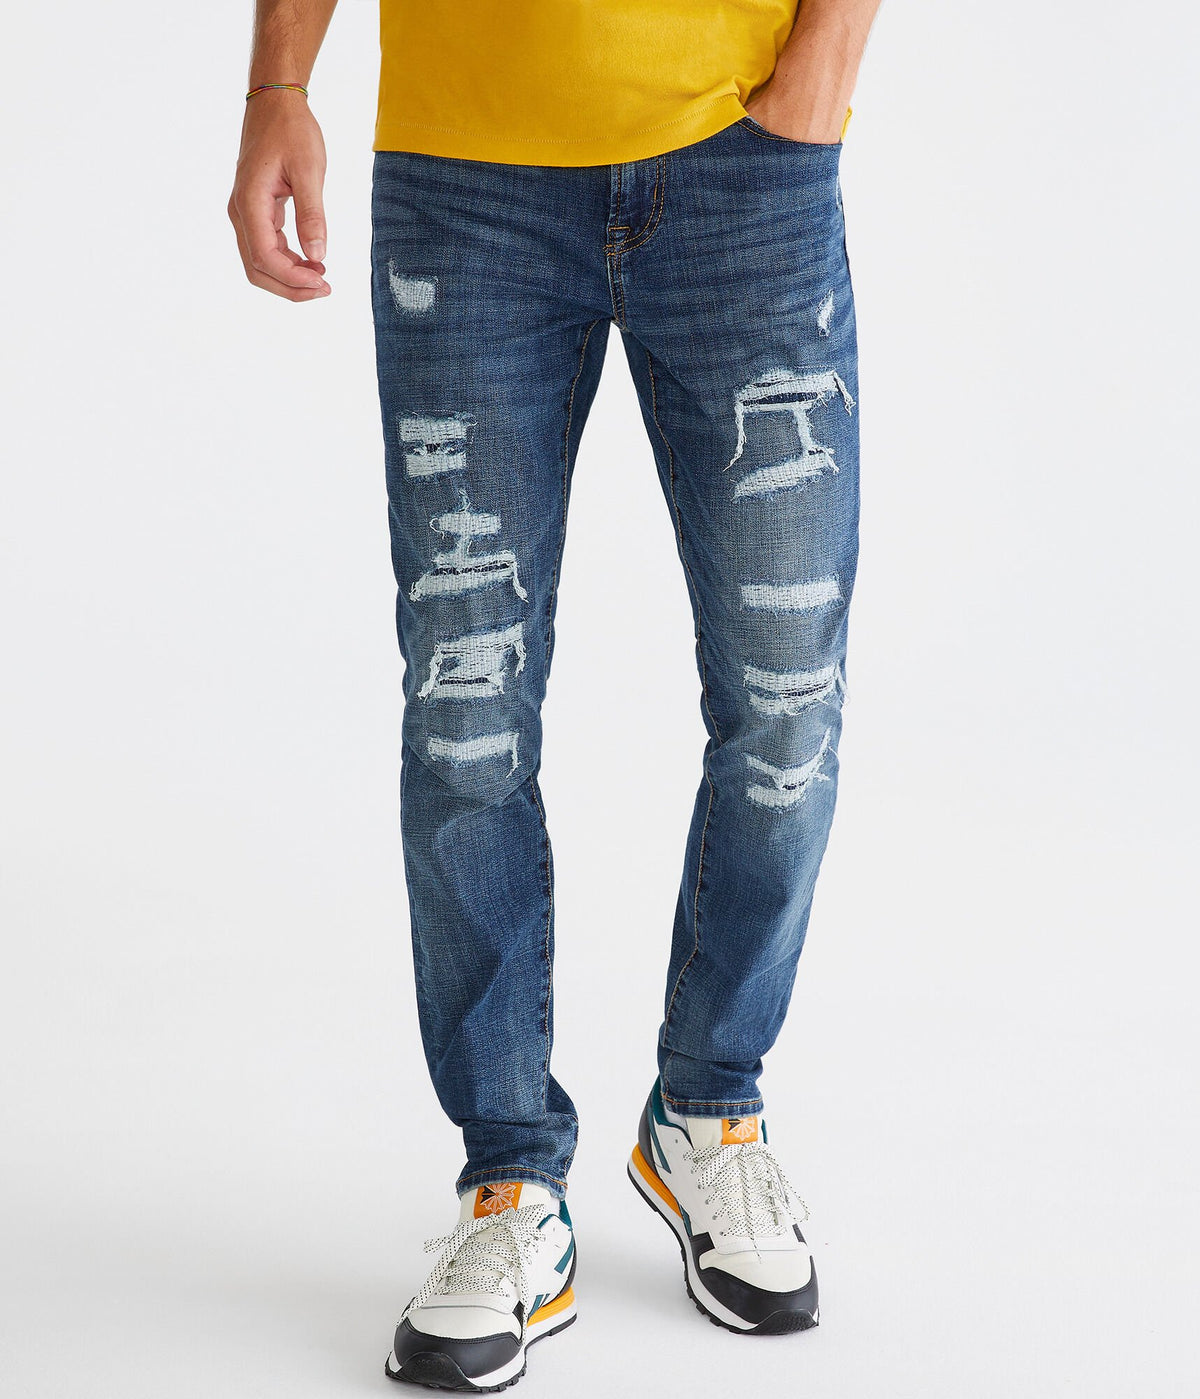 Aeropostale Mens' Skinny Premium Max Stretch Jean with COOLMAX Technology - Washed Denim - Size 32X30 - Cotton - Teen Fashion & Clothing Medium Wash